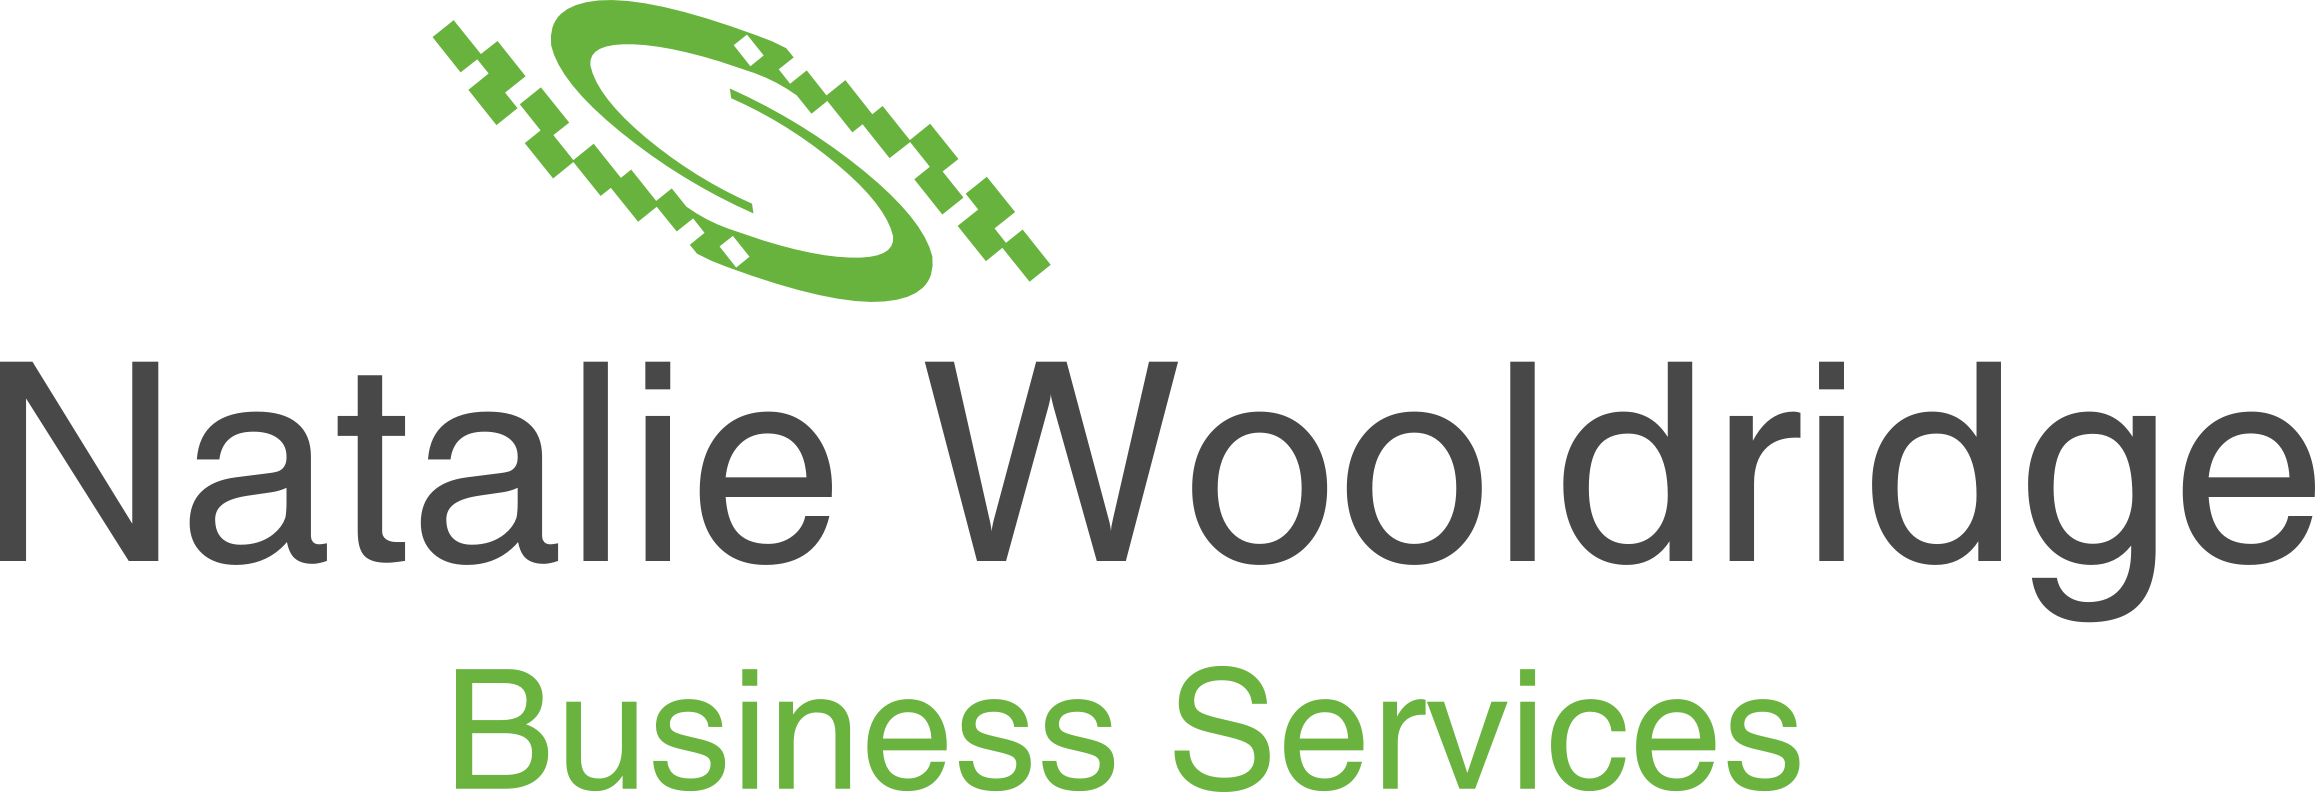 Natalie Wooldridge Business Services